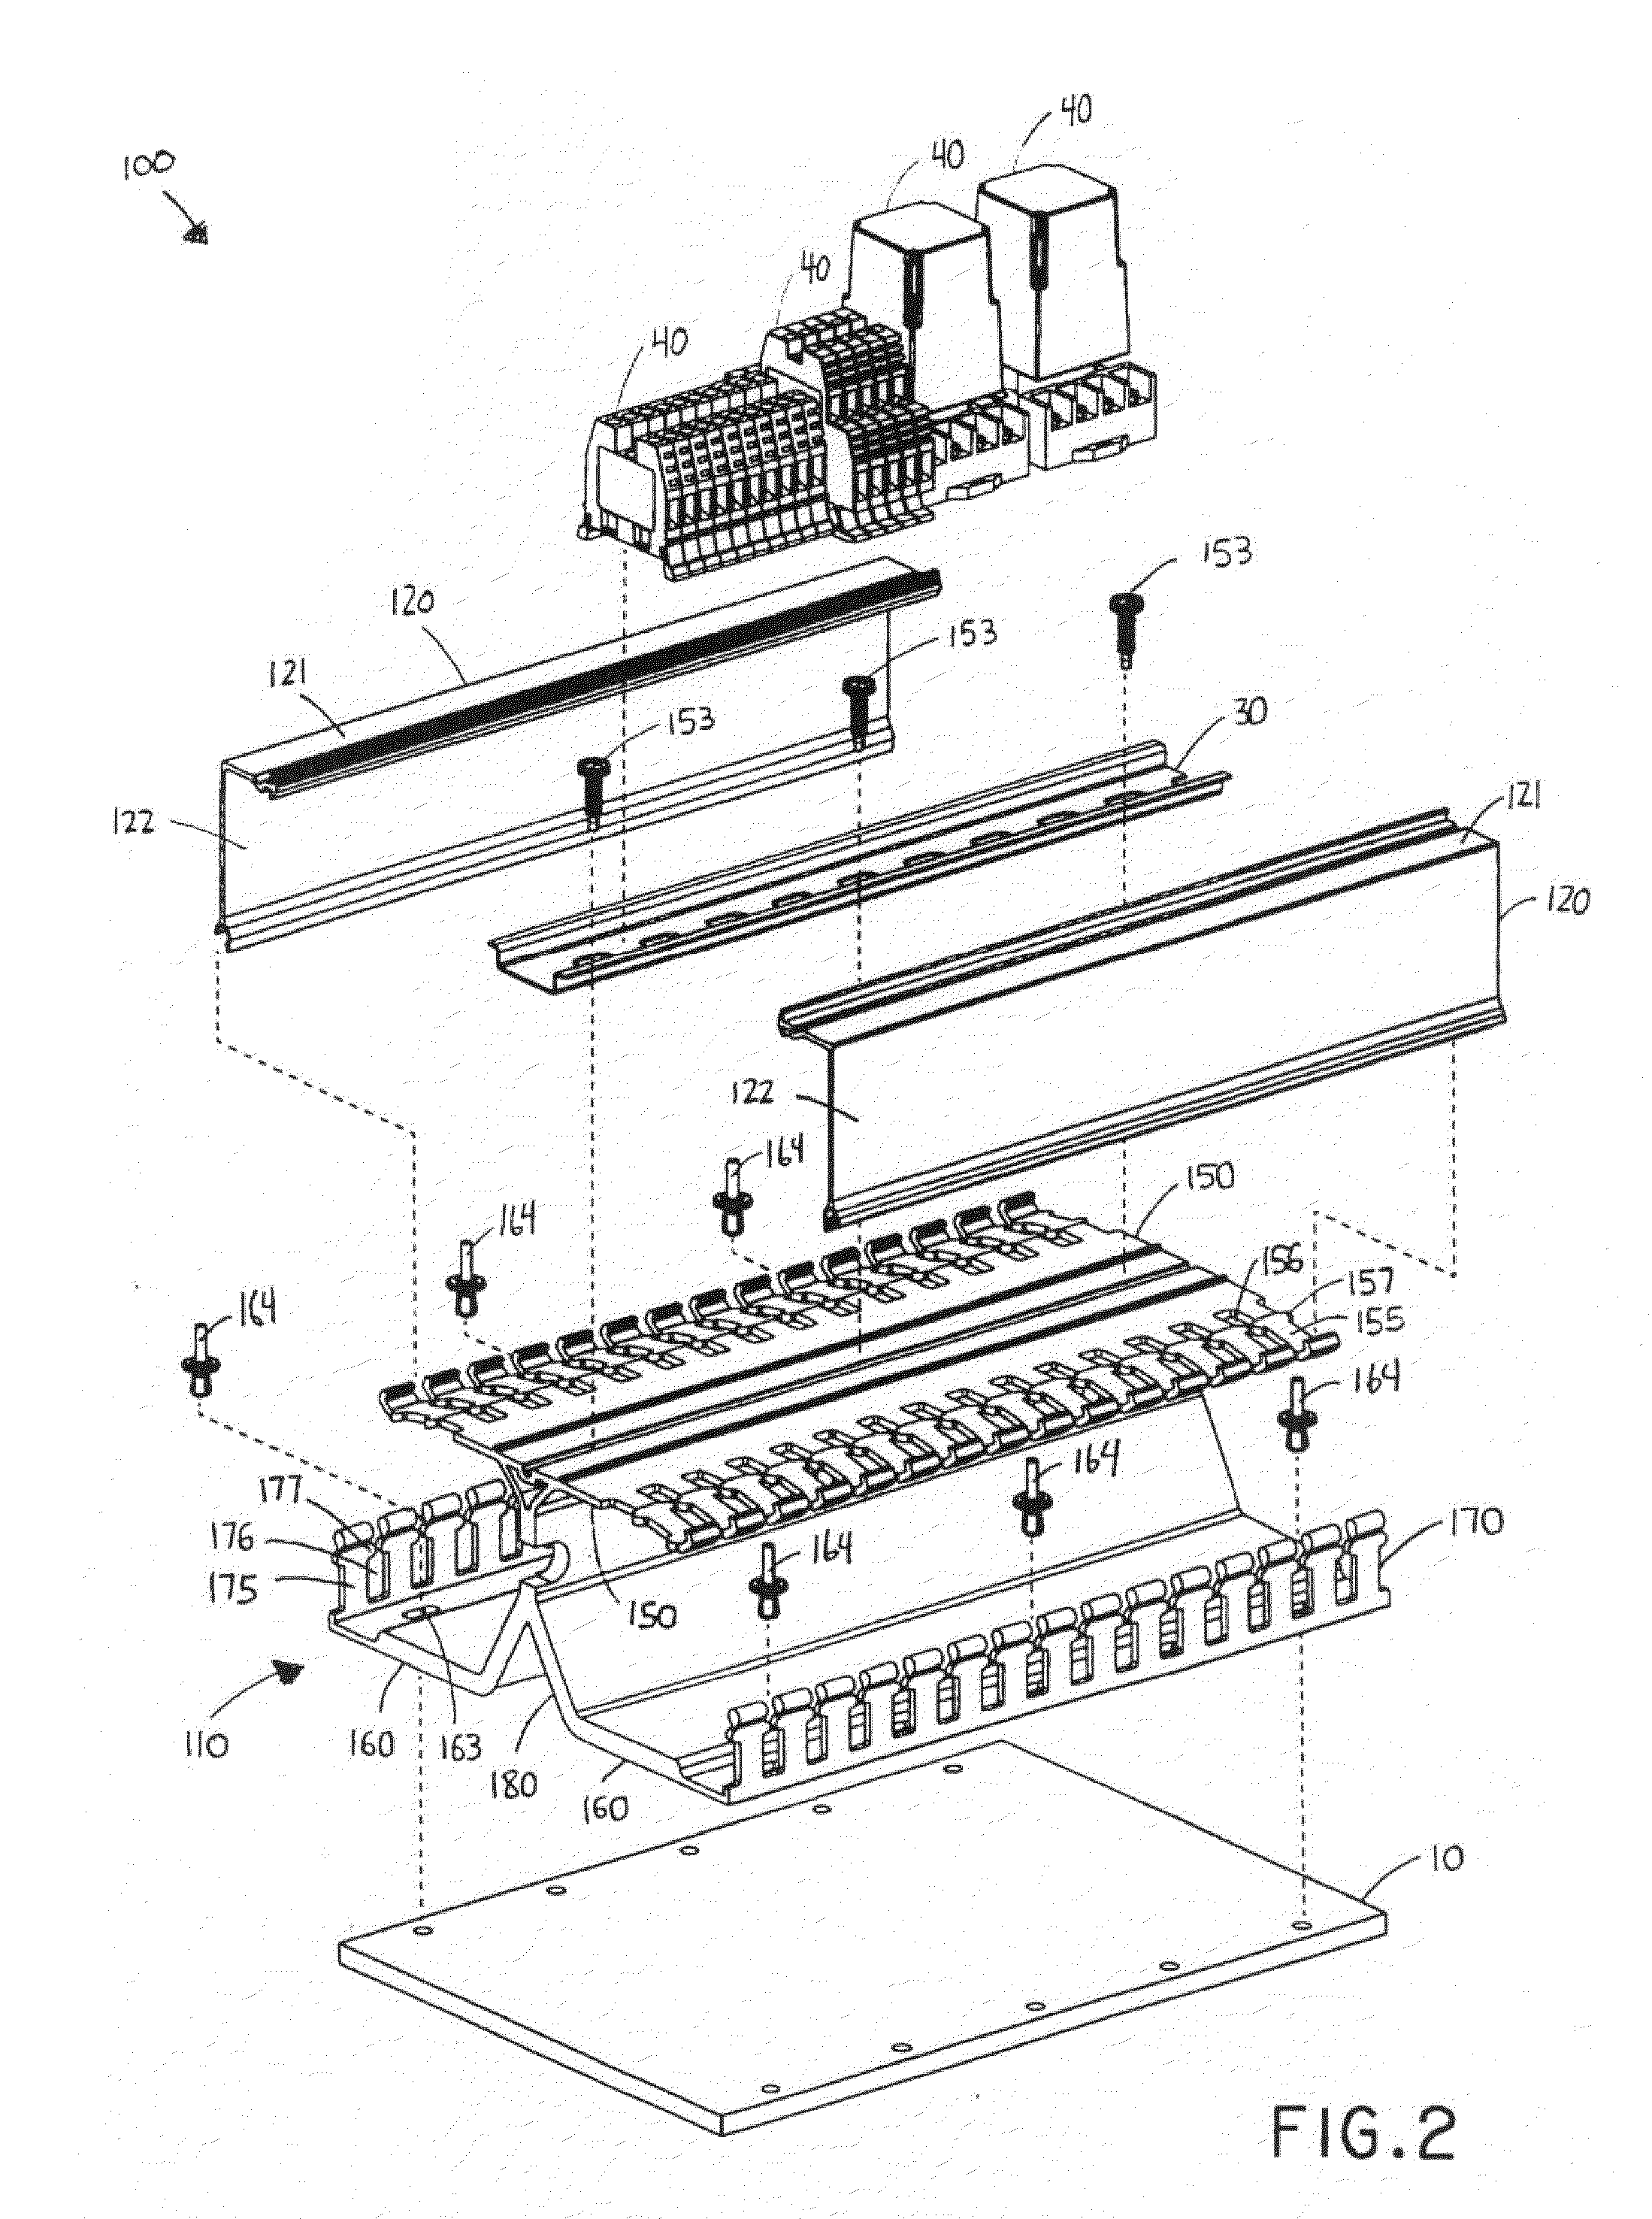 Rail Wiring Duct